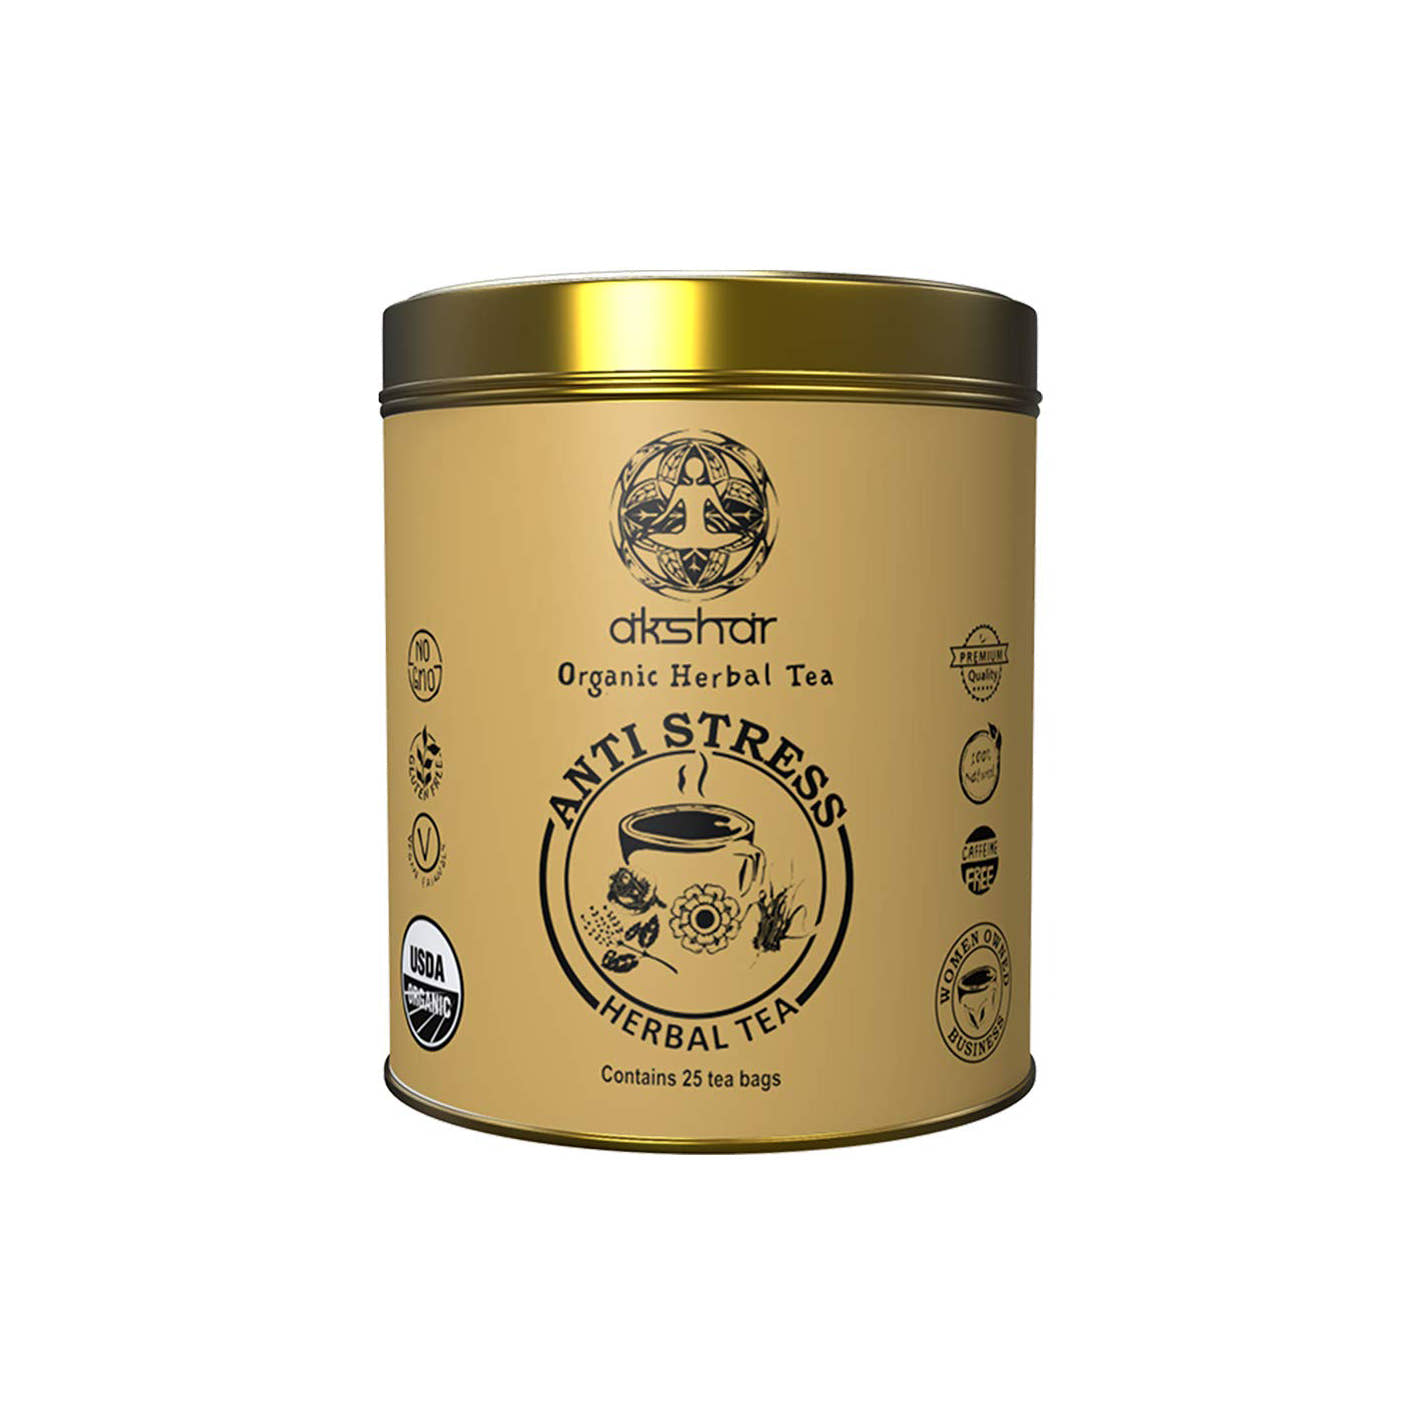 anti stress sips by akshar organic herbal tea 25 tea bags in a gold tan tin